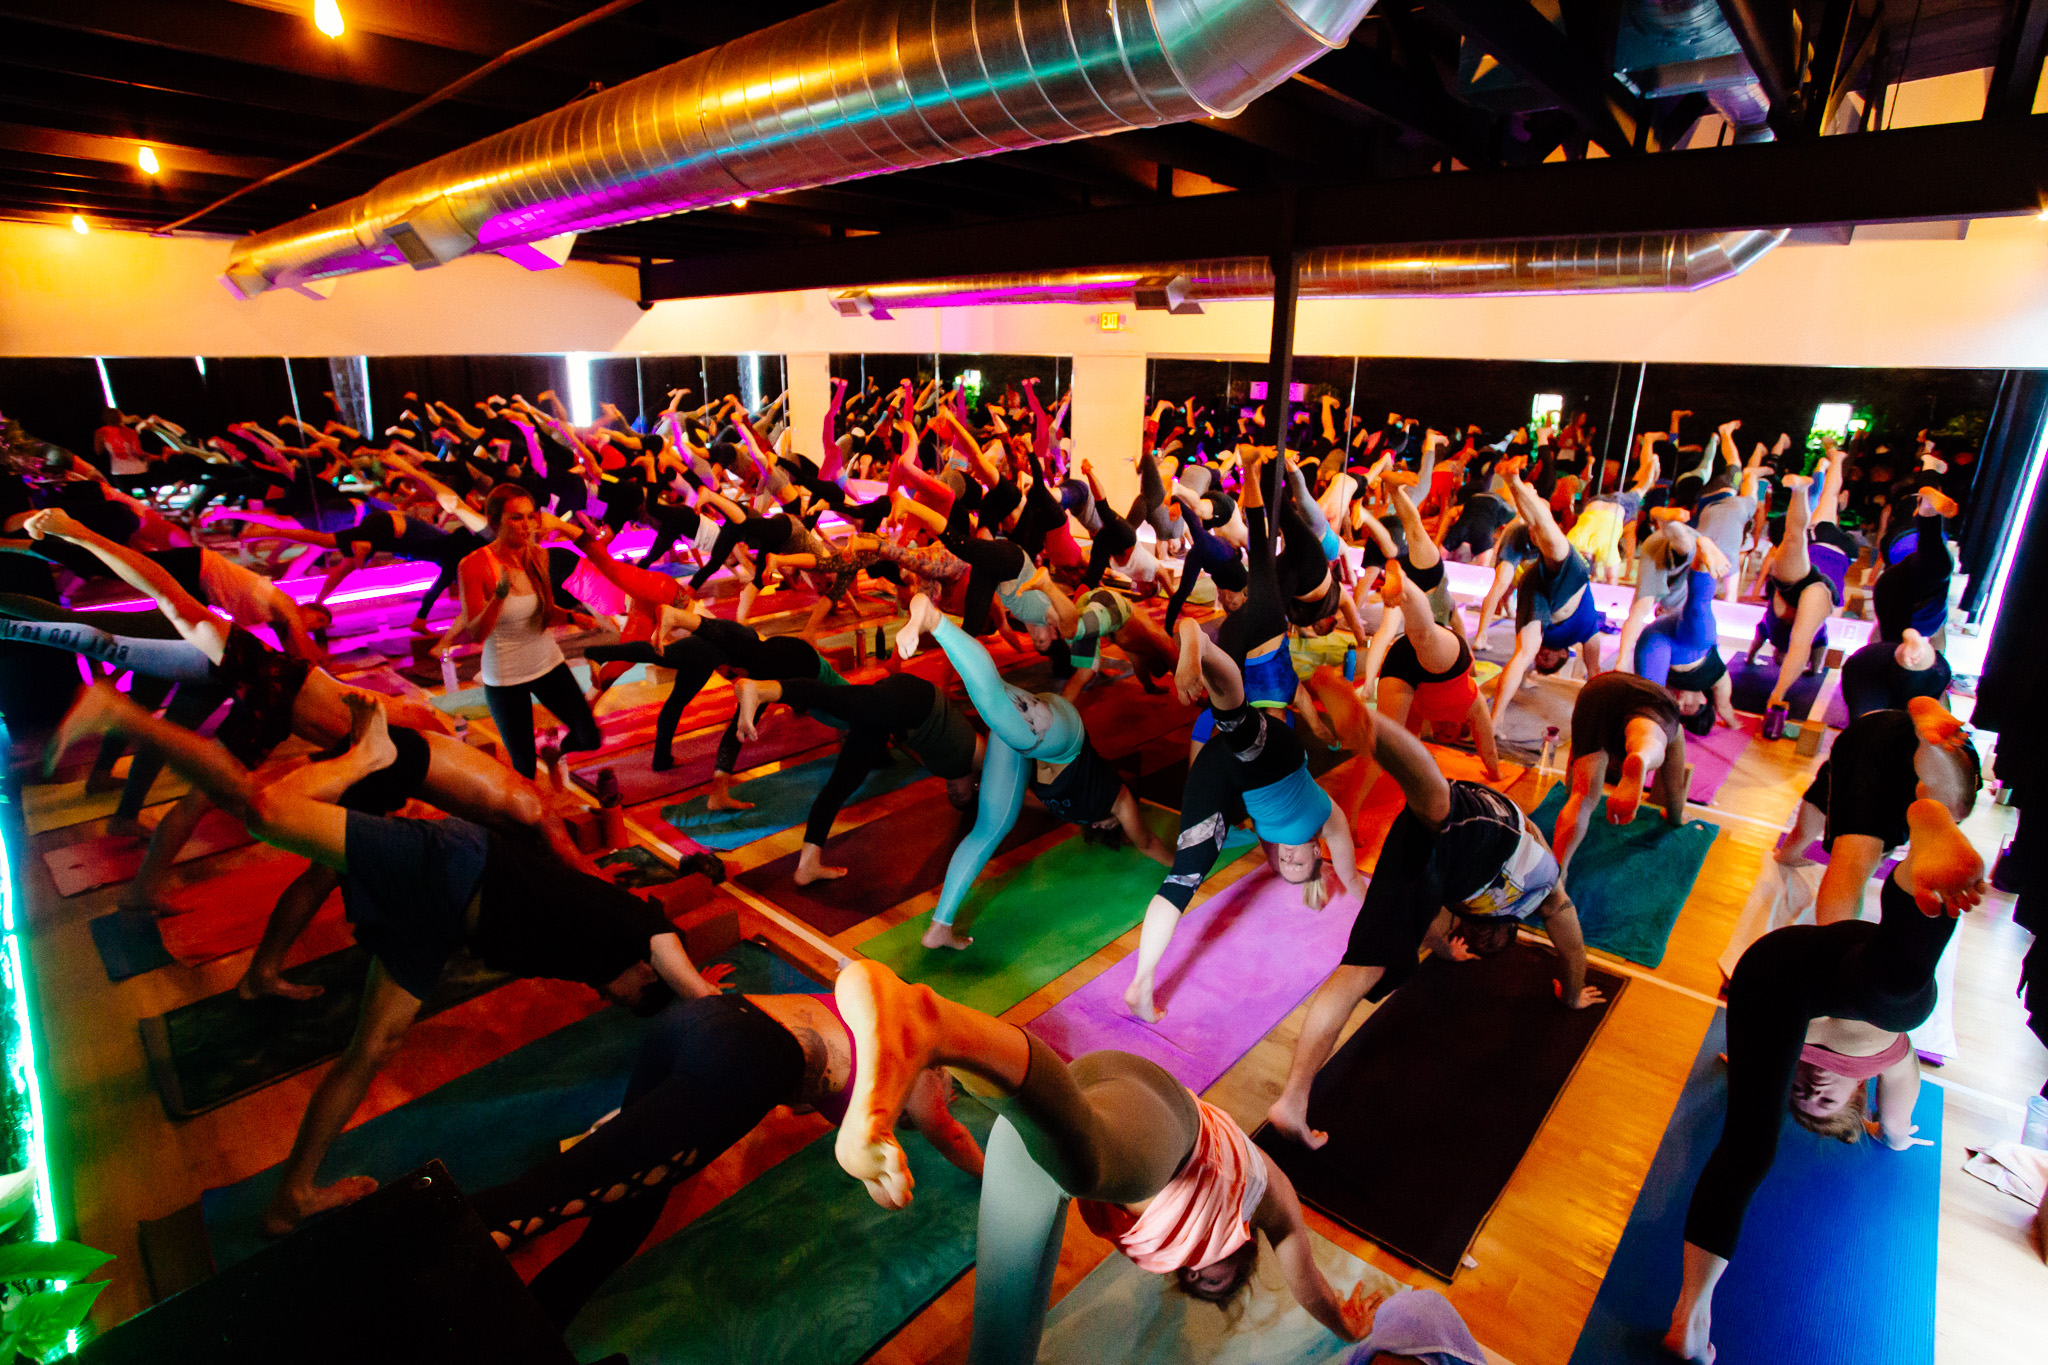 After one year anniversary, Black Swan Yoga keeps building community  through yoga